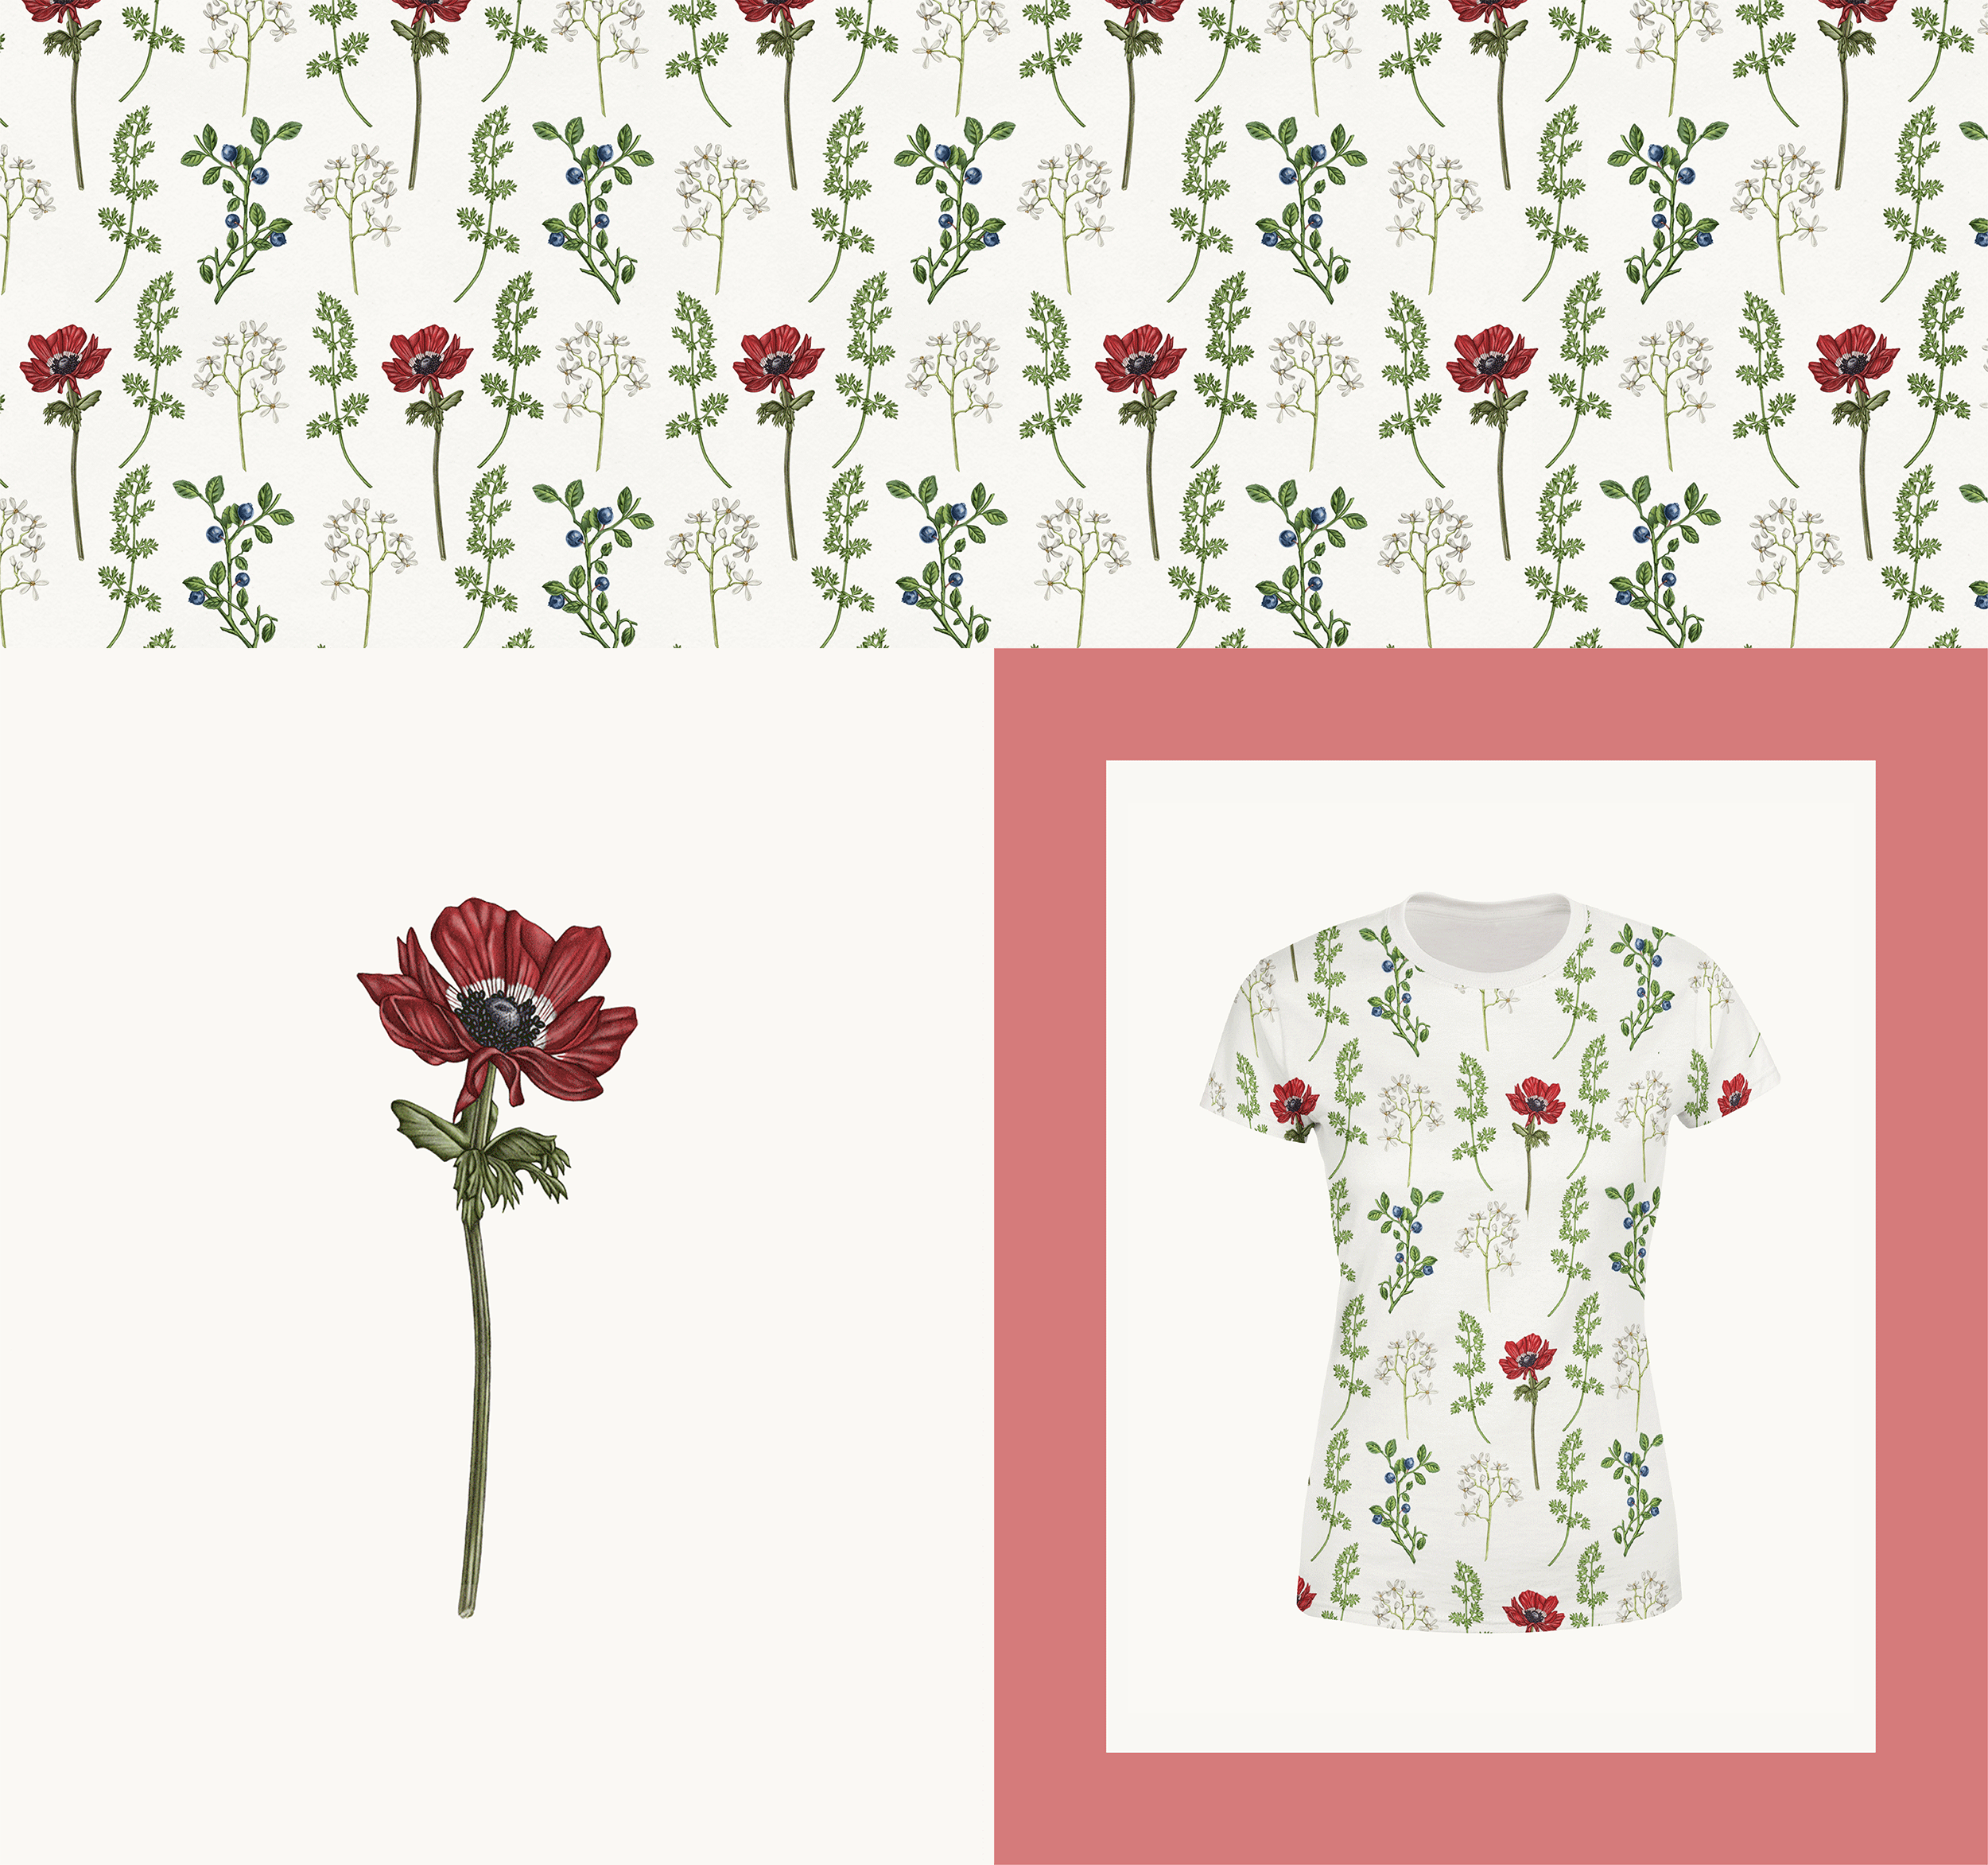 giulia-borsi-illustration-t-shirt-pattern-design full-width